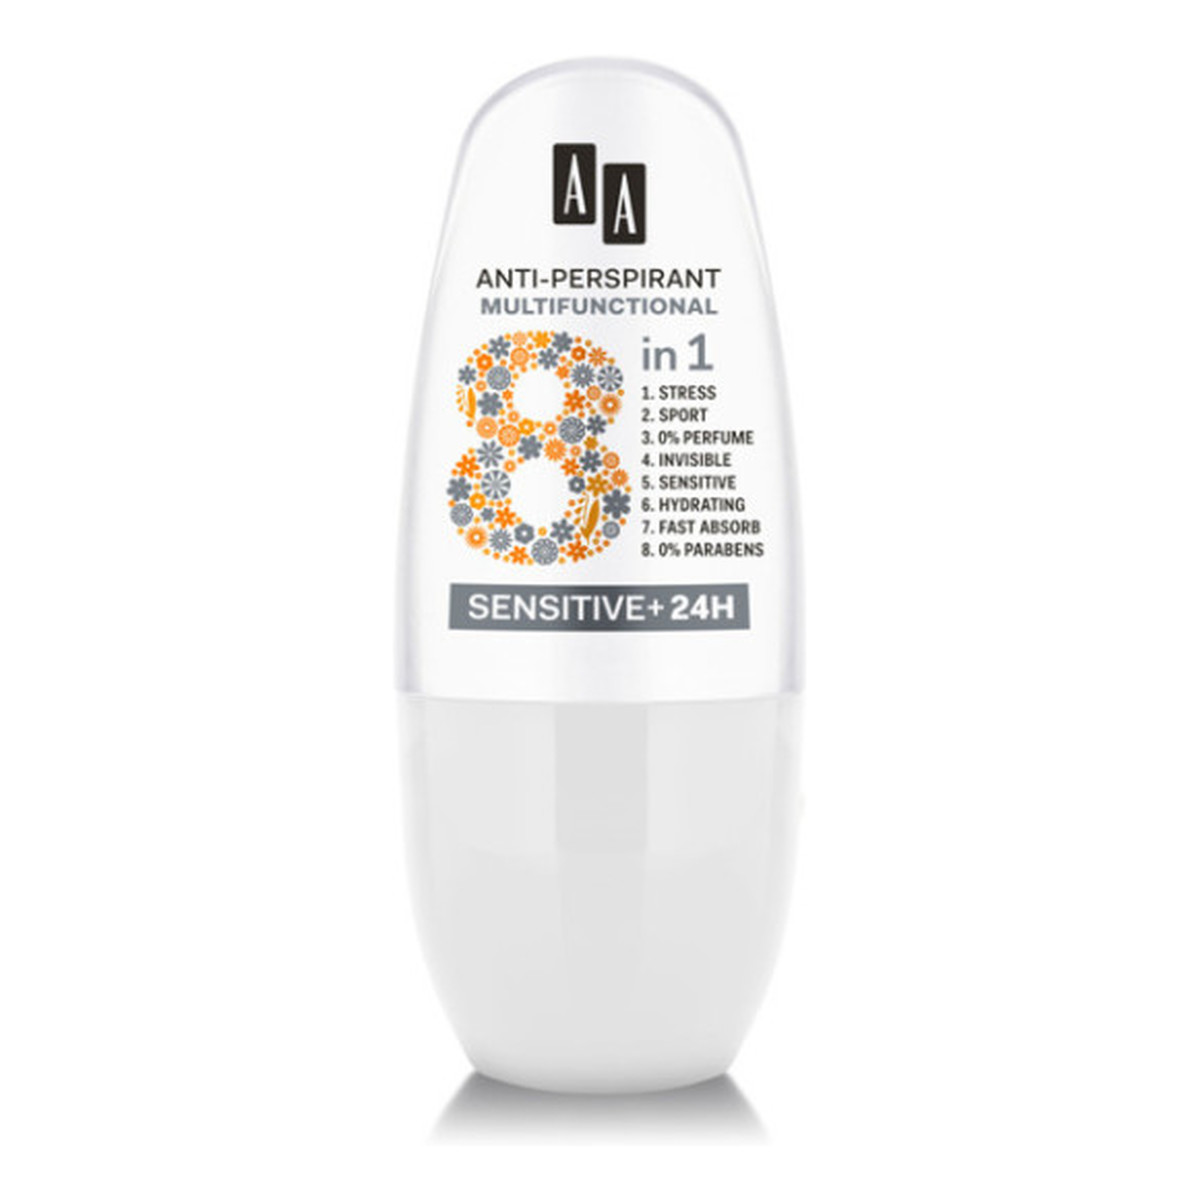 AA Sensitive 24h Multifuncional 8 in 1 Dezodorant Roll-On 50ml